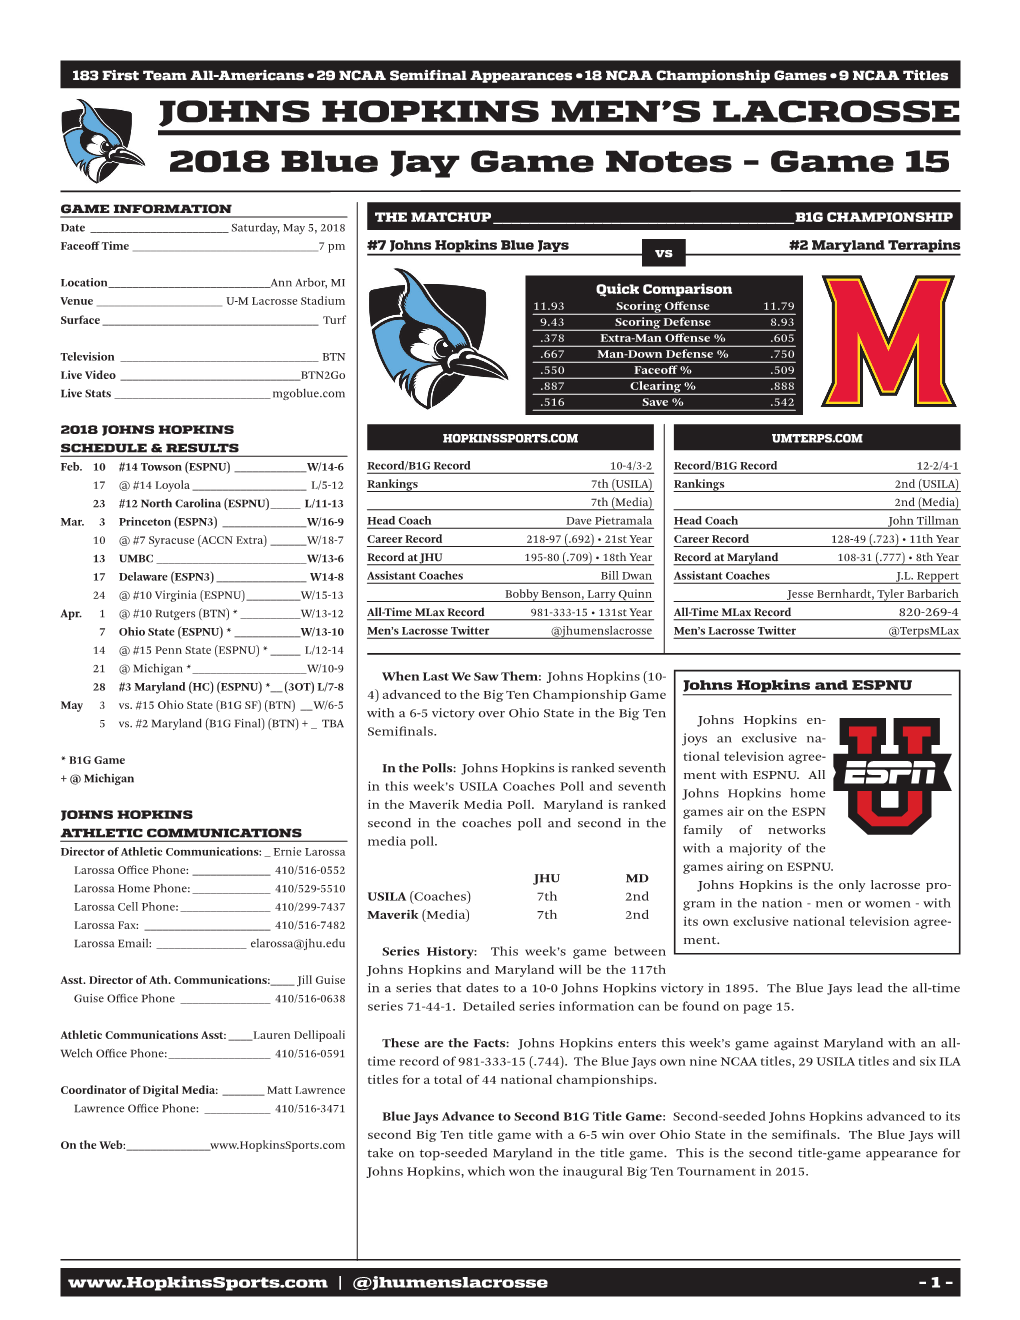 JOHNS HOPKINS MEN's LACROSSE 2018 Blue Jay Game Notes